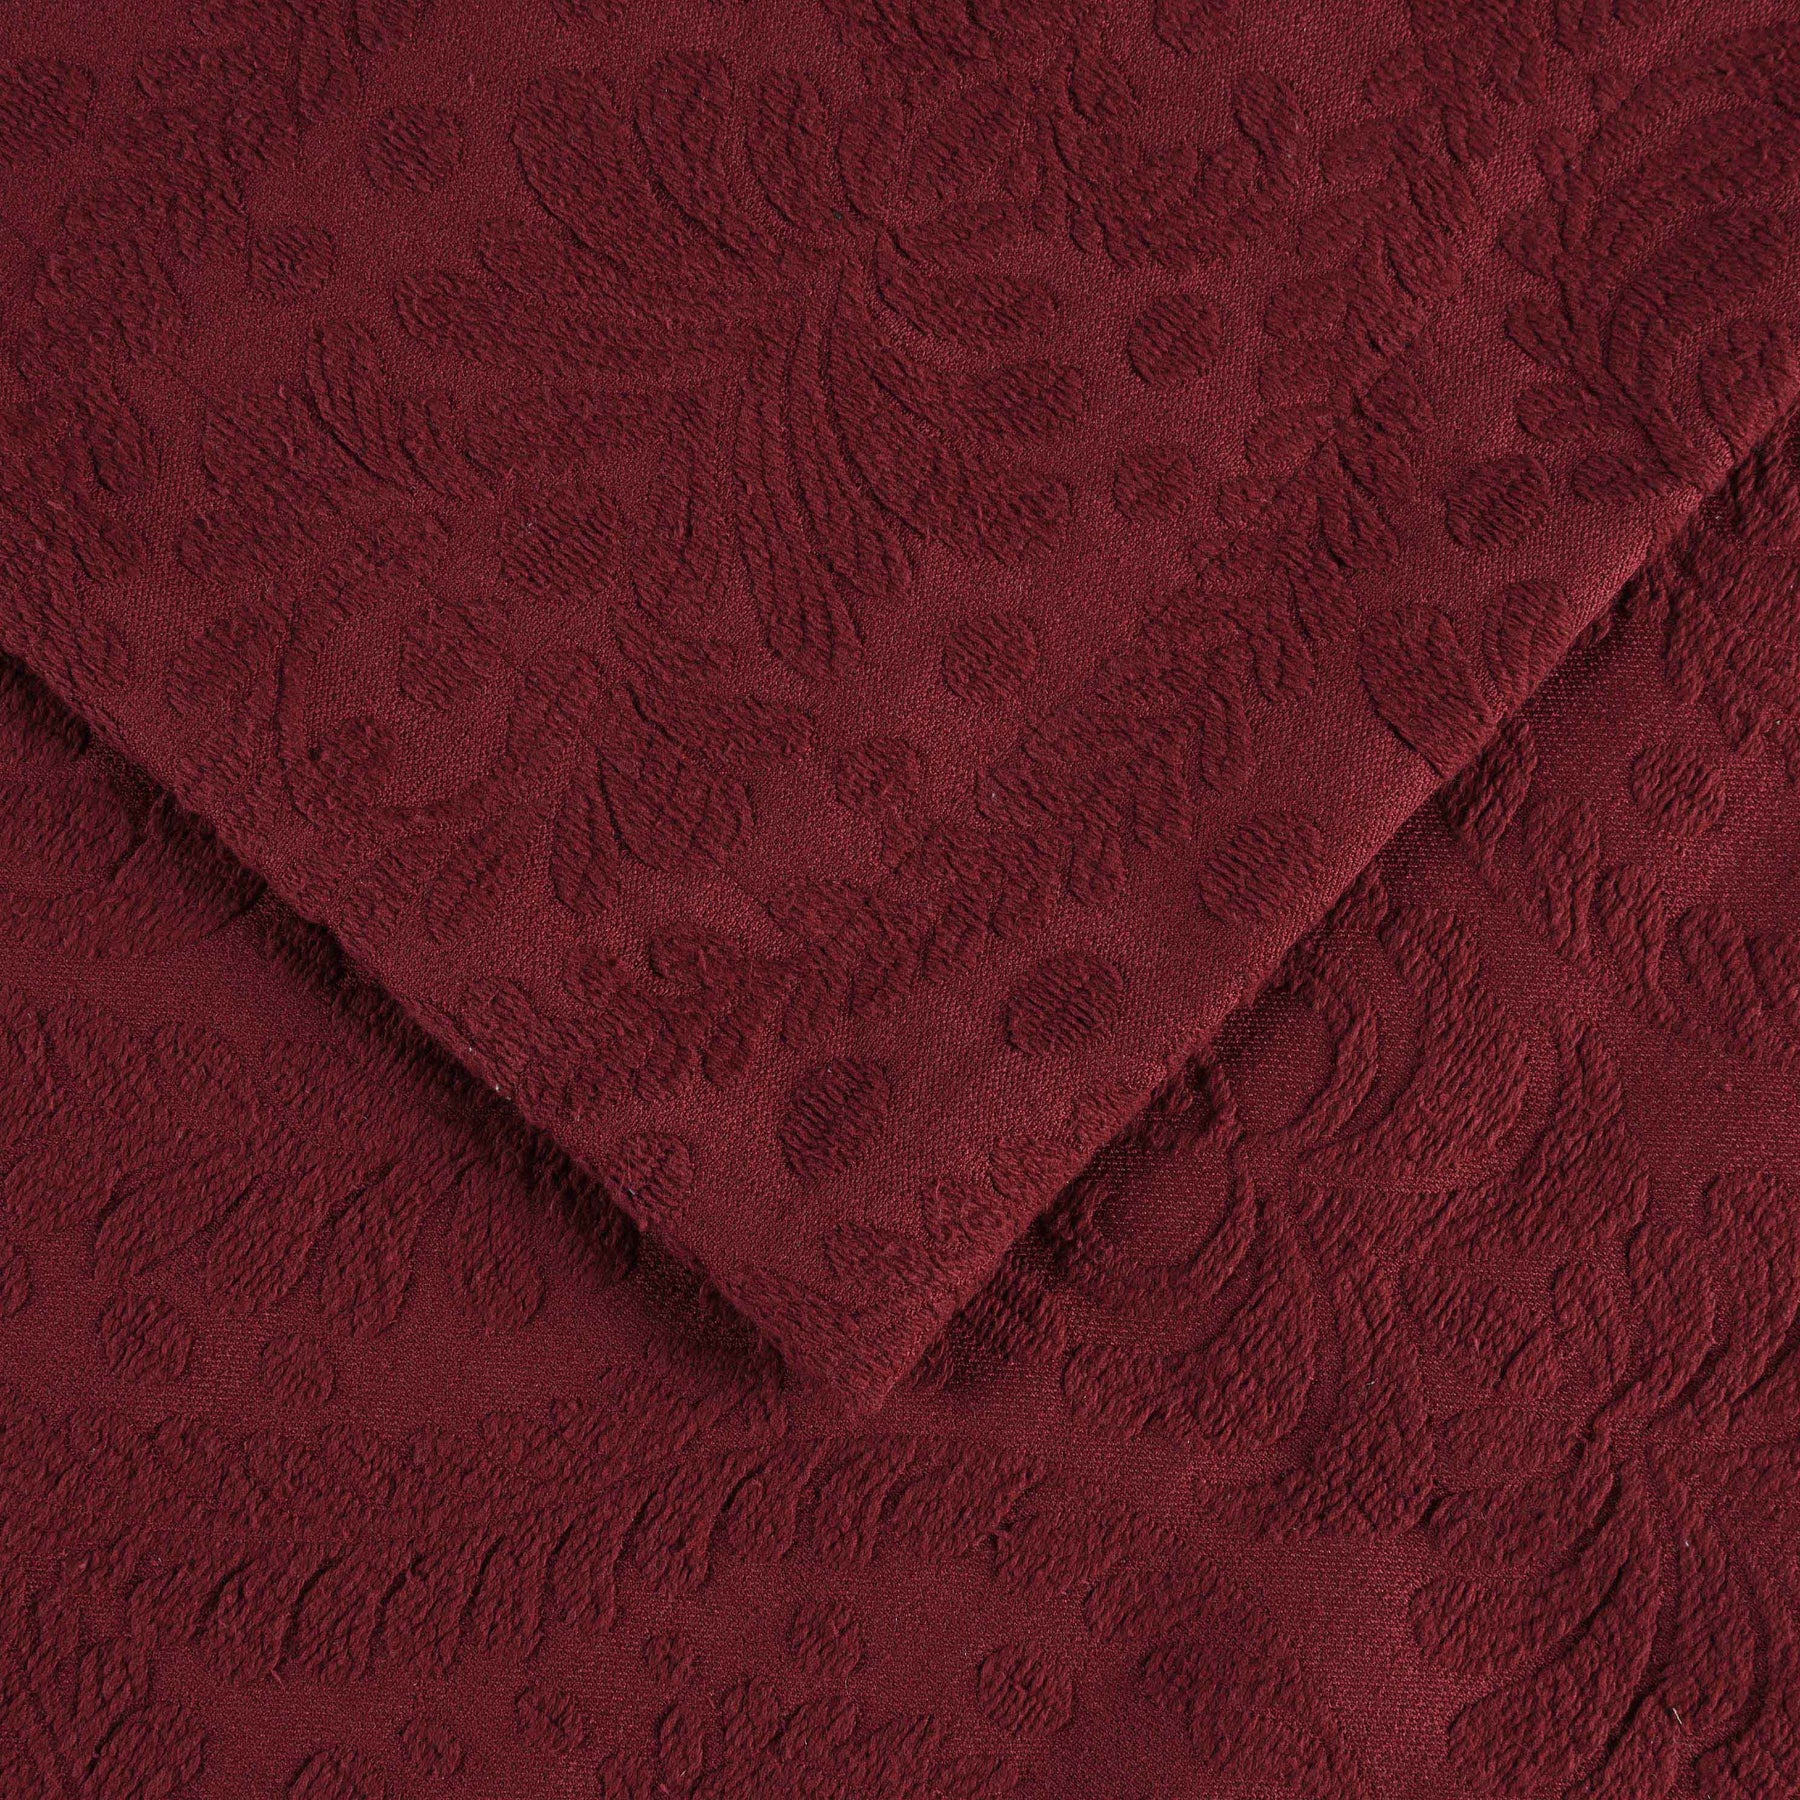 Aspen Cotton Blend Jacquard Floral Scalloped Edge Bedspread Set - Burgundy